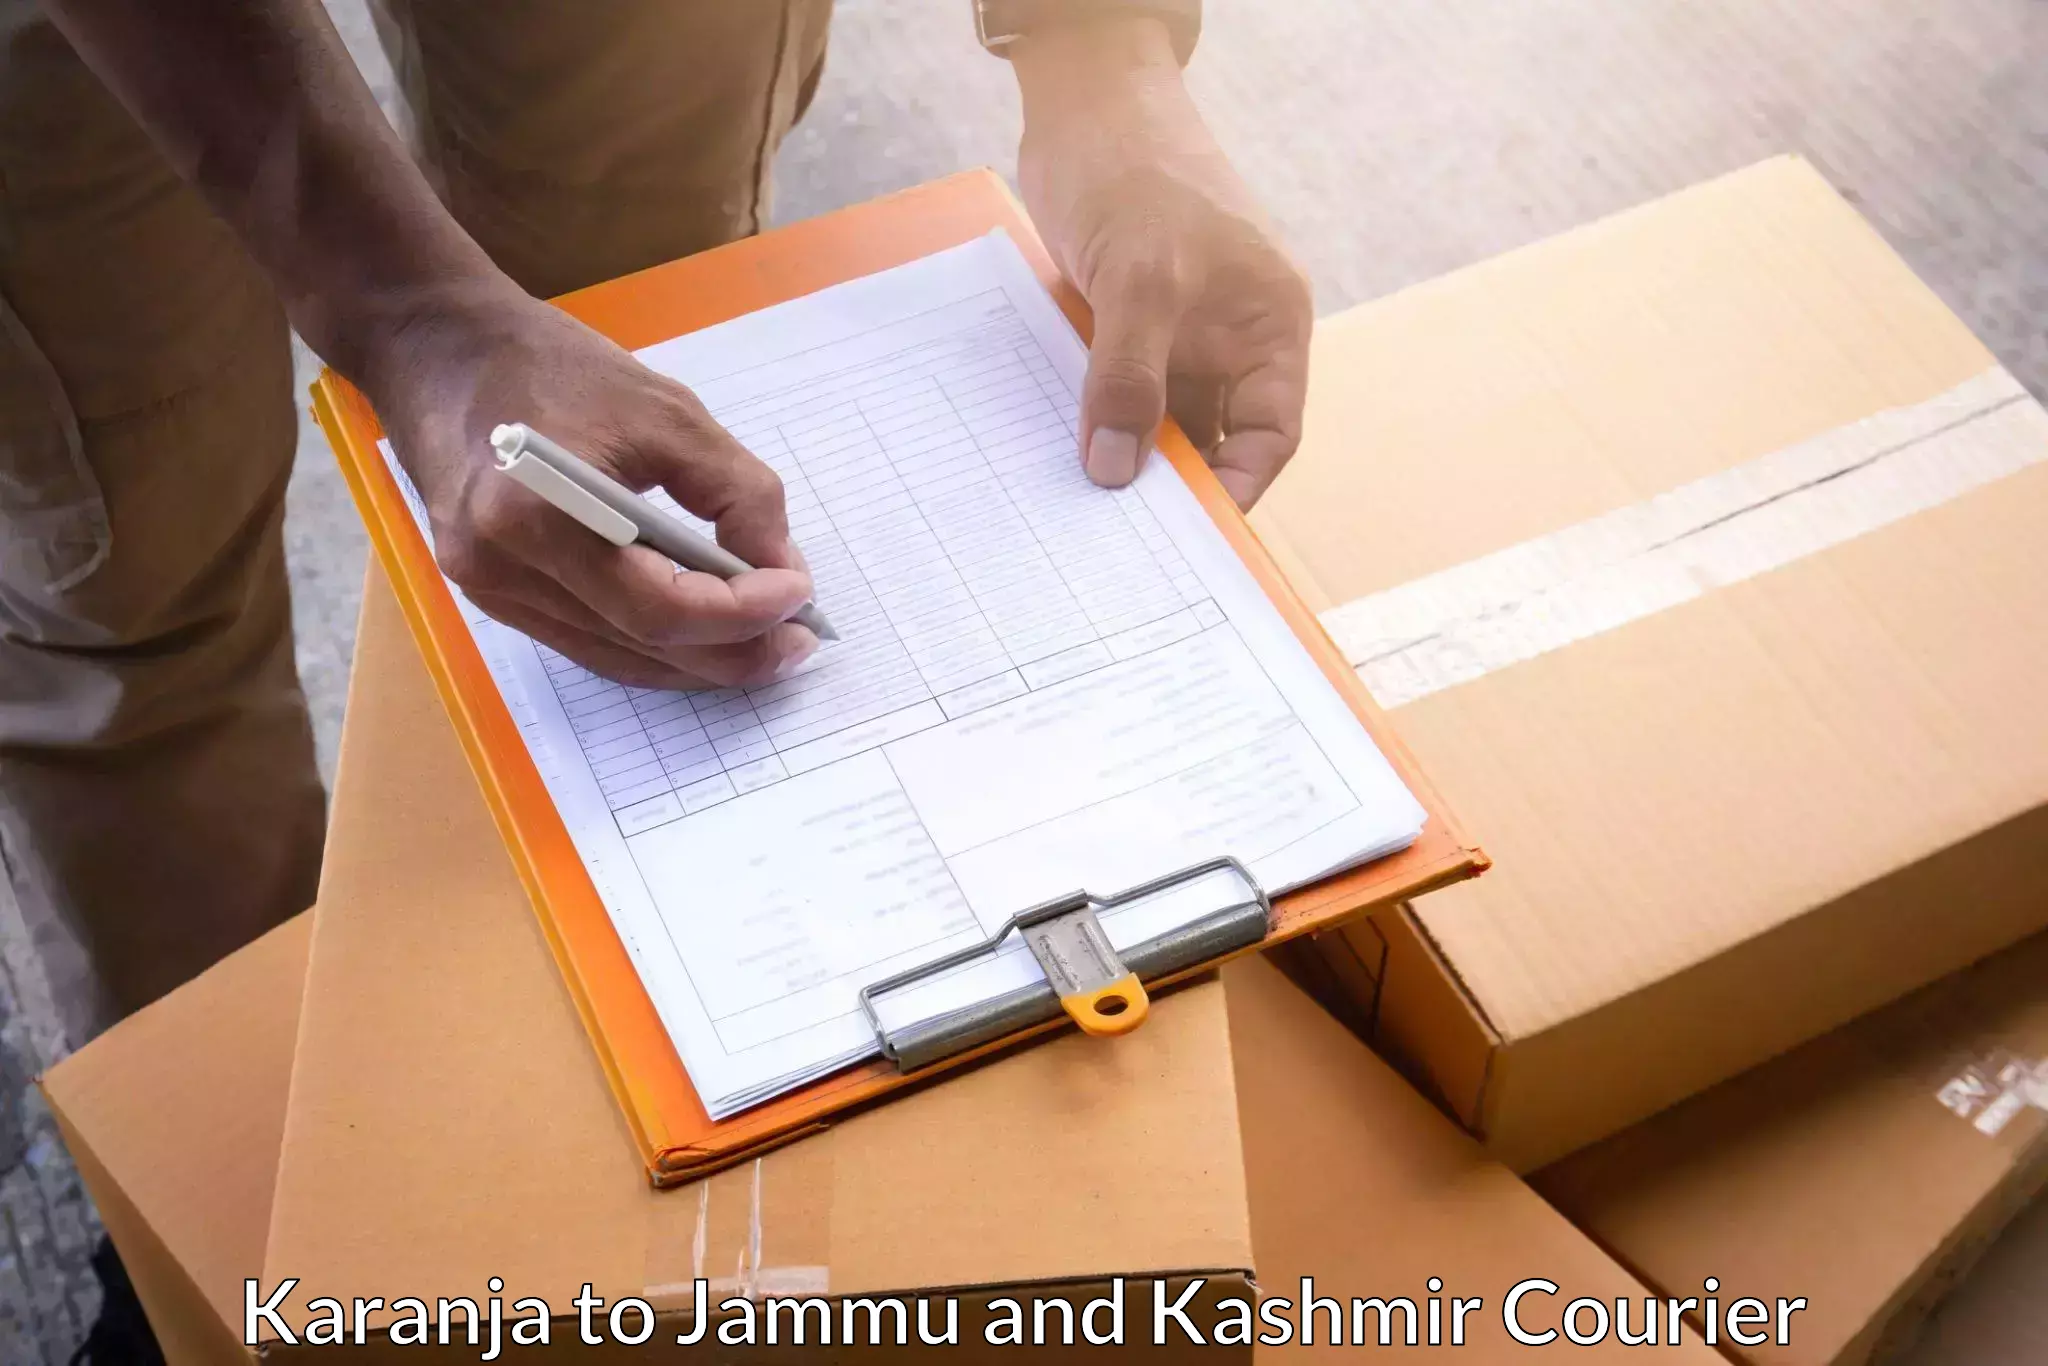 Express postal services Karanja to Srinagar Kashmir